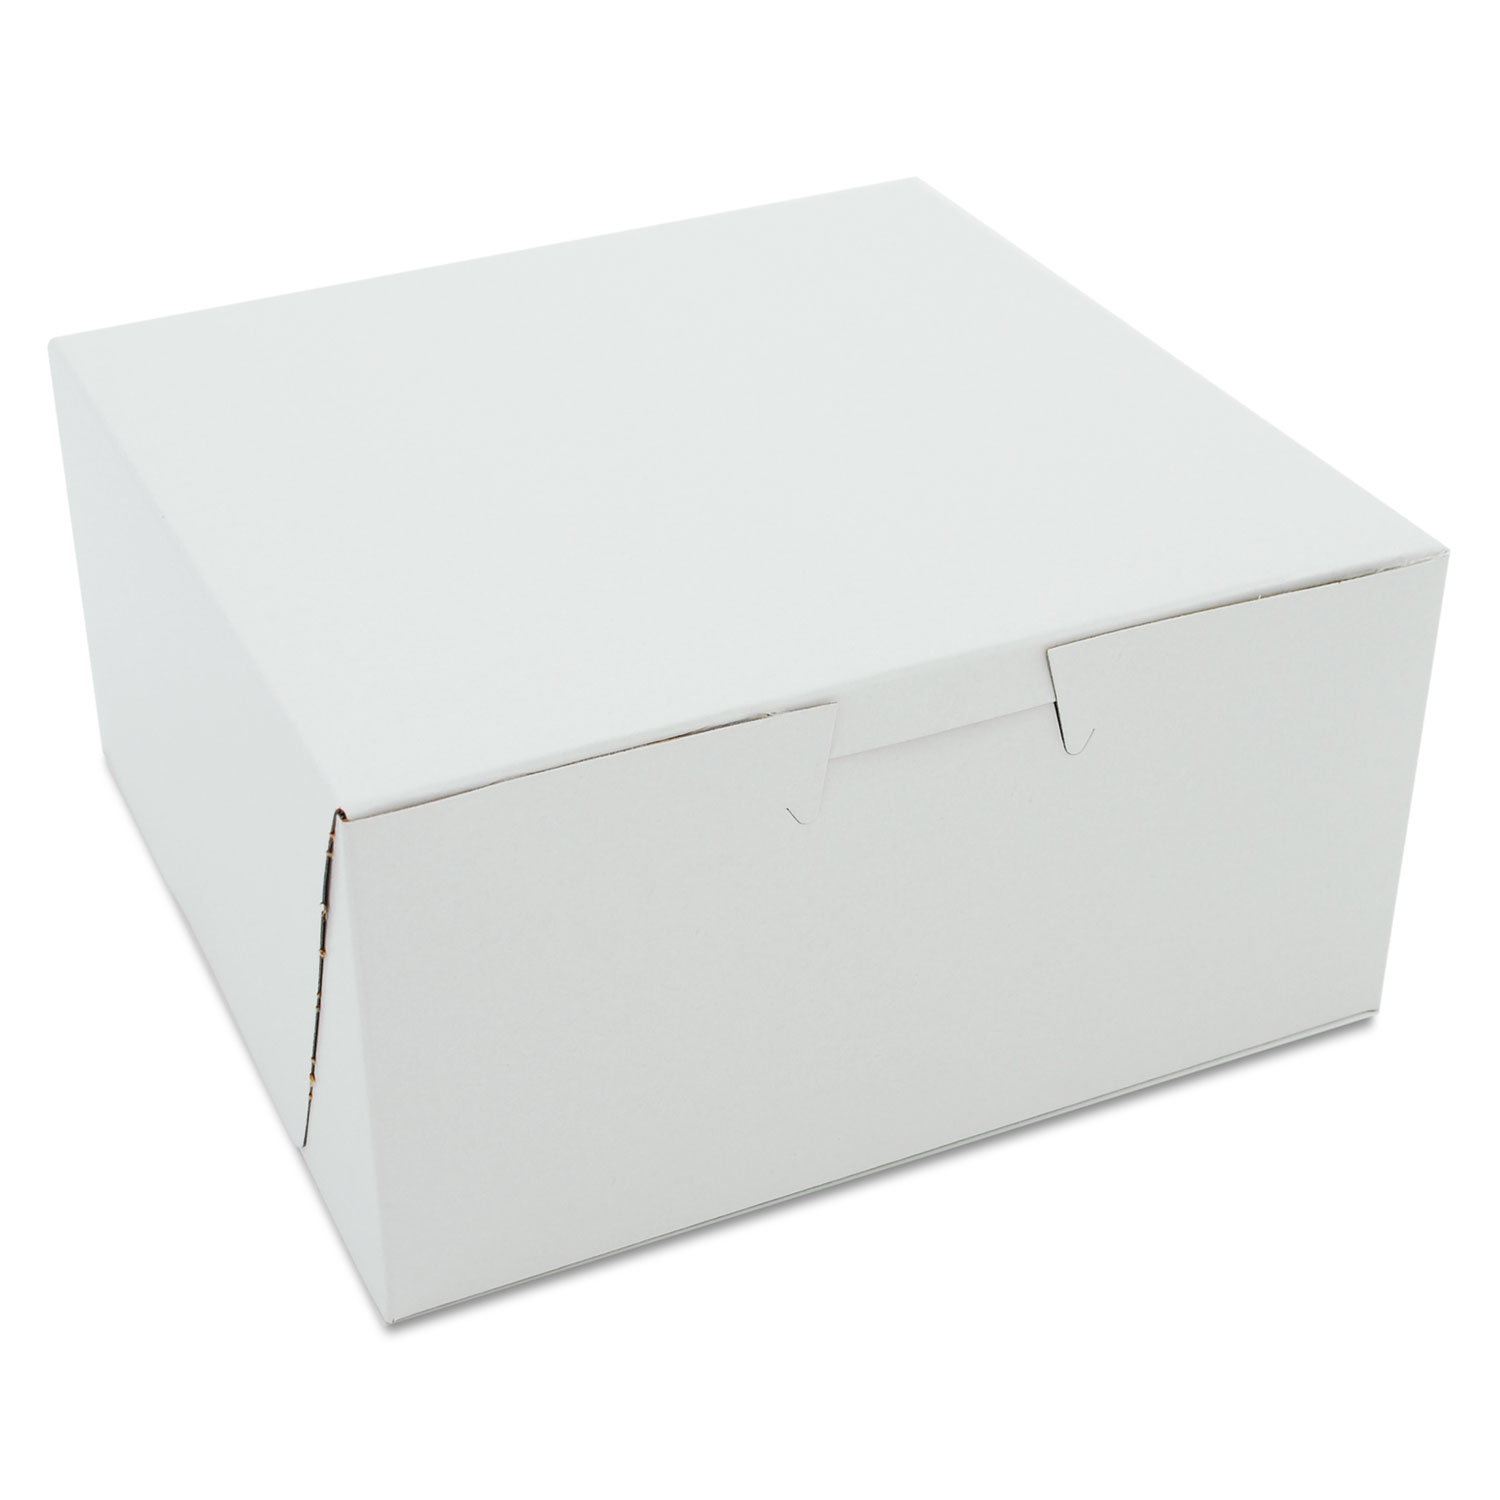  SCT 905 Non-Window Bakery Boxes, 6 x 6 x 3, White, 250/Carton (SCH0905) 